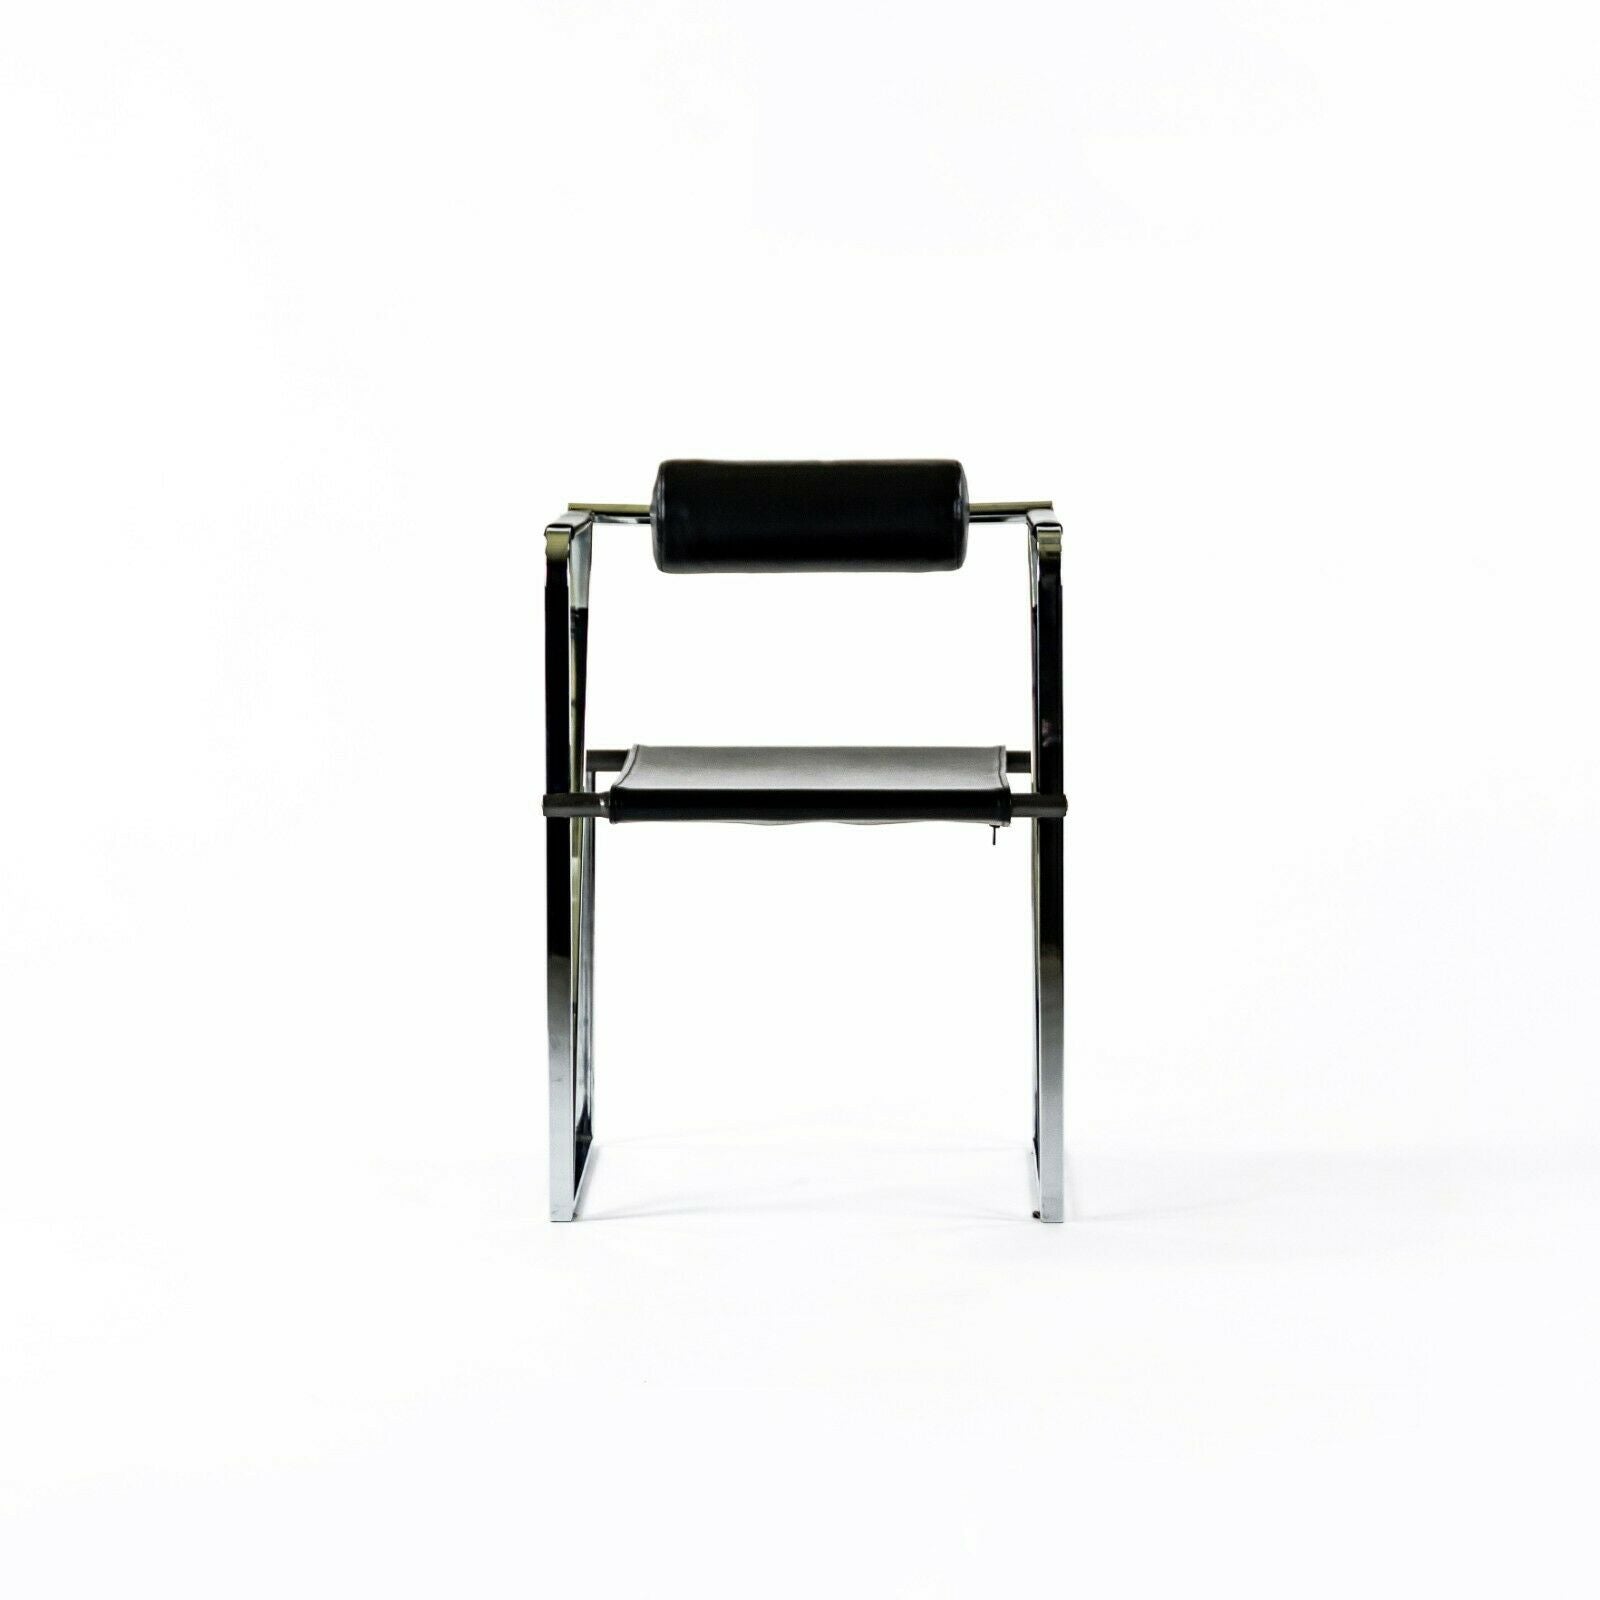 SOLD 1982 Rare Mario Botta Chrome Postmodern Seconda Chair for Alias Furniture of Italy